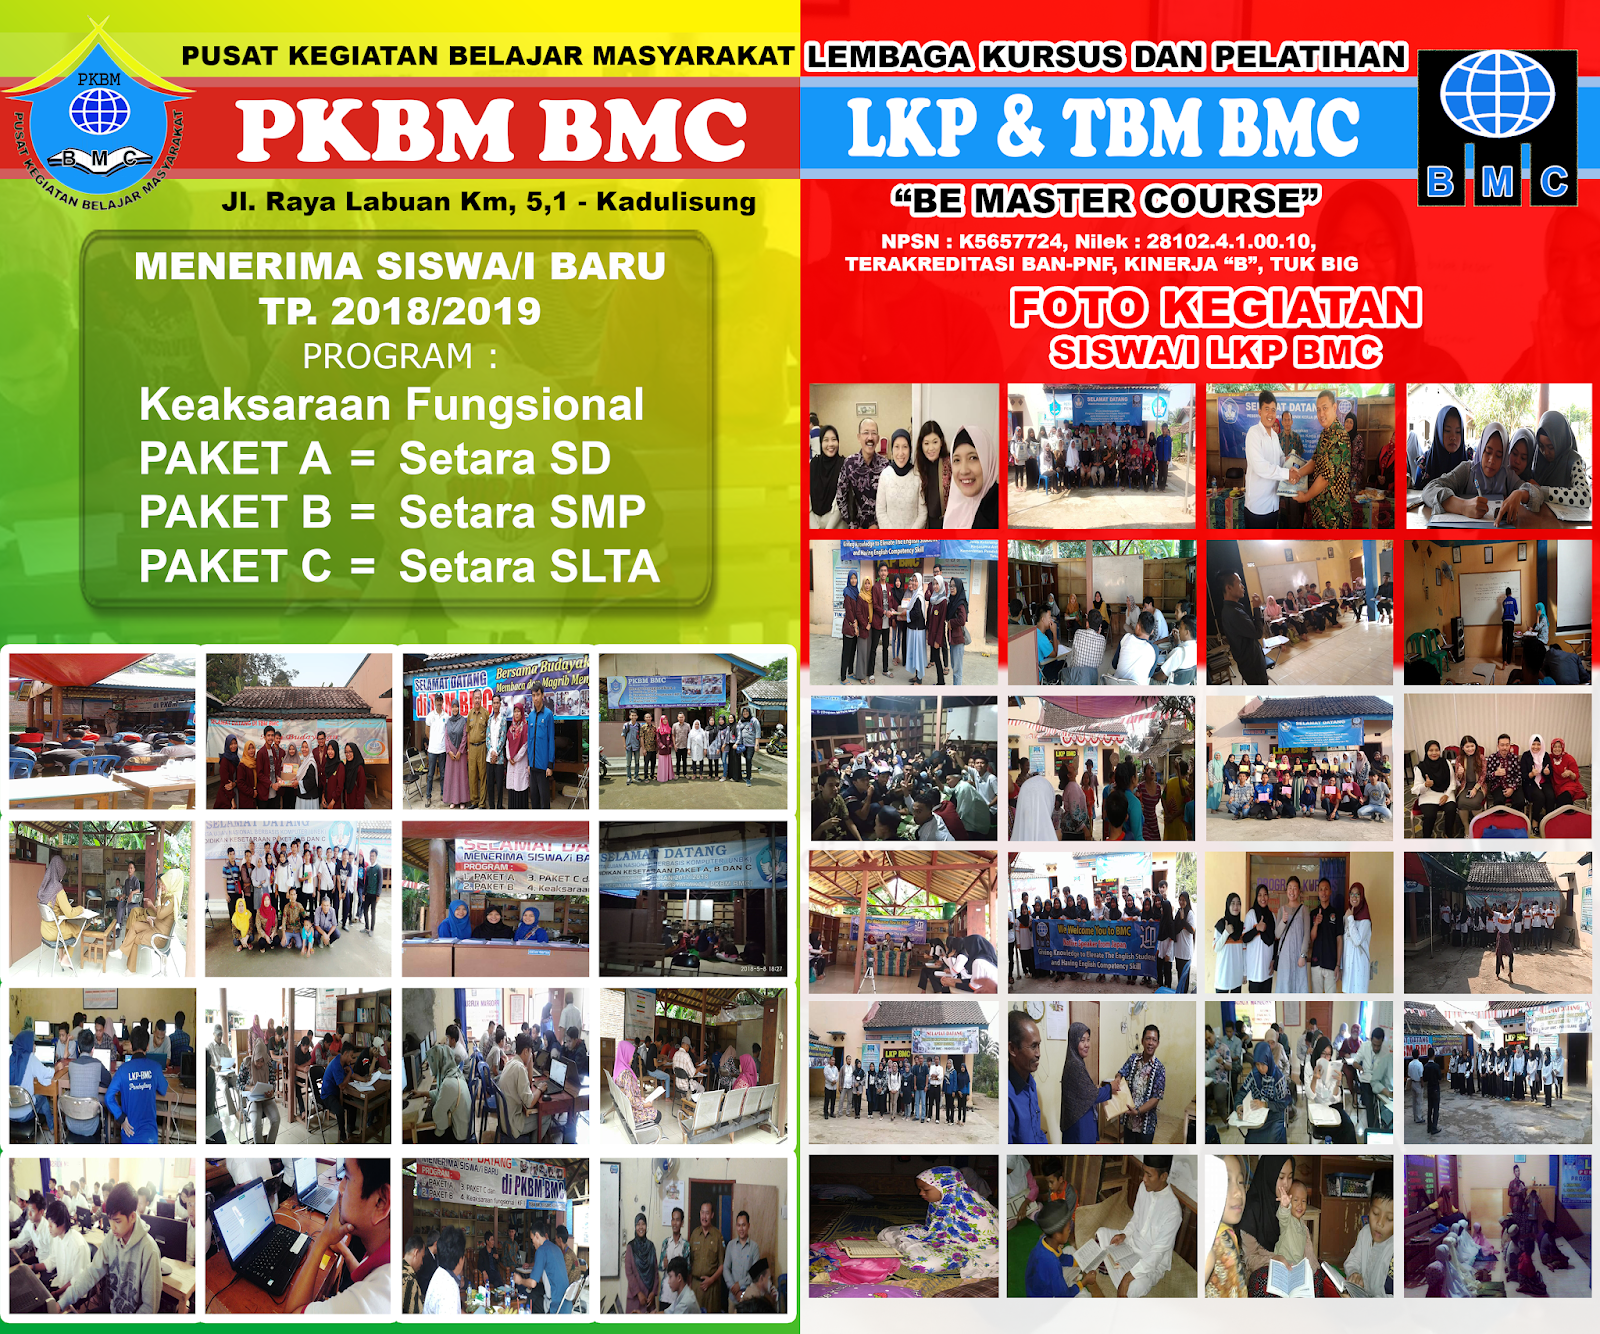 Lkp Bmc Pandeglang Banten Banner Pkbm Lkp Tbm